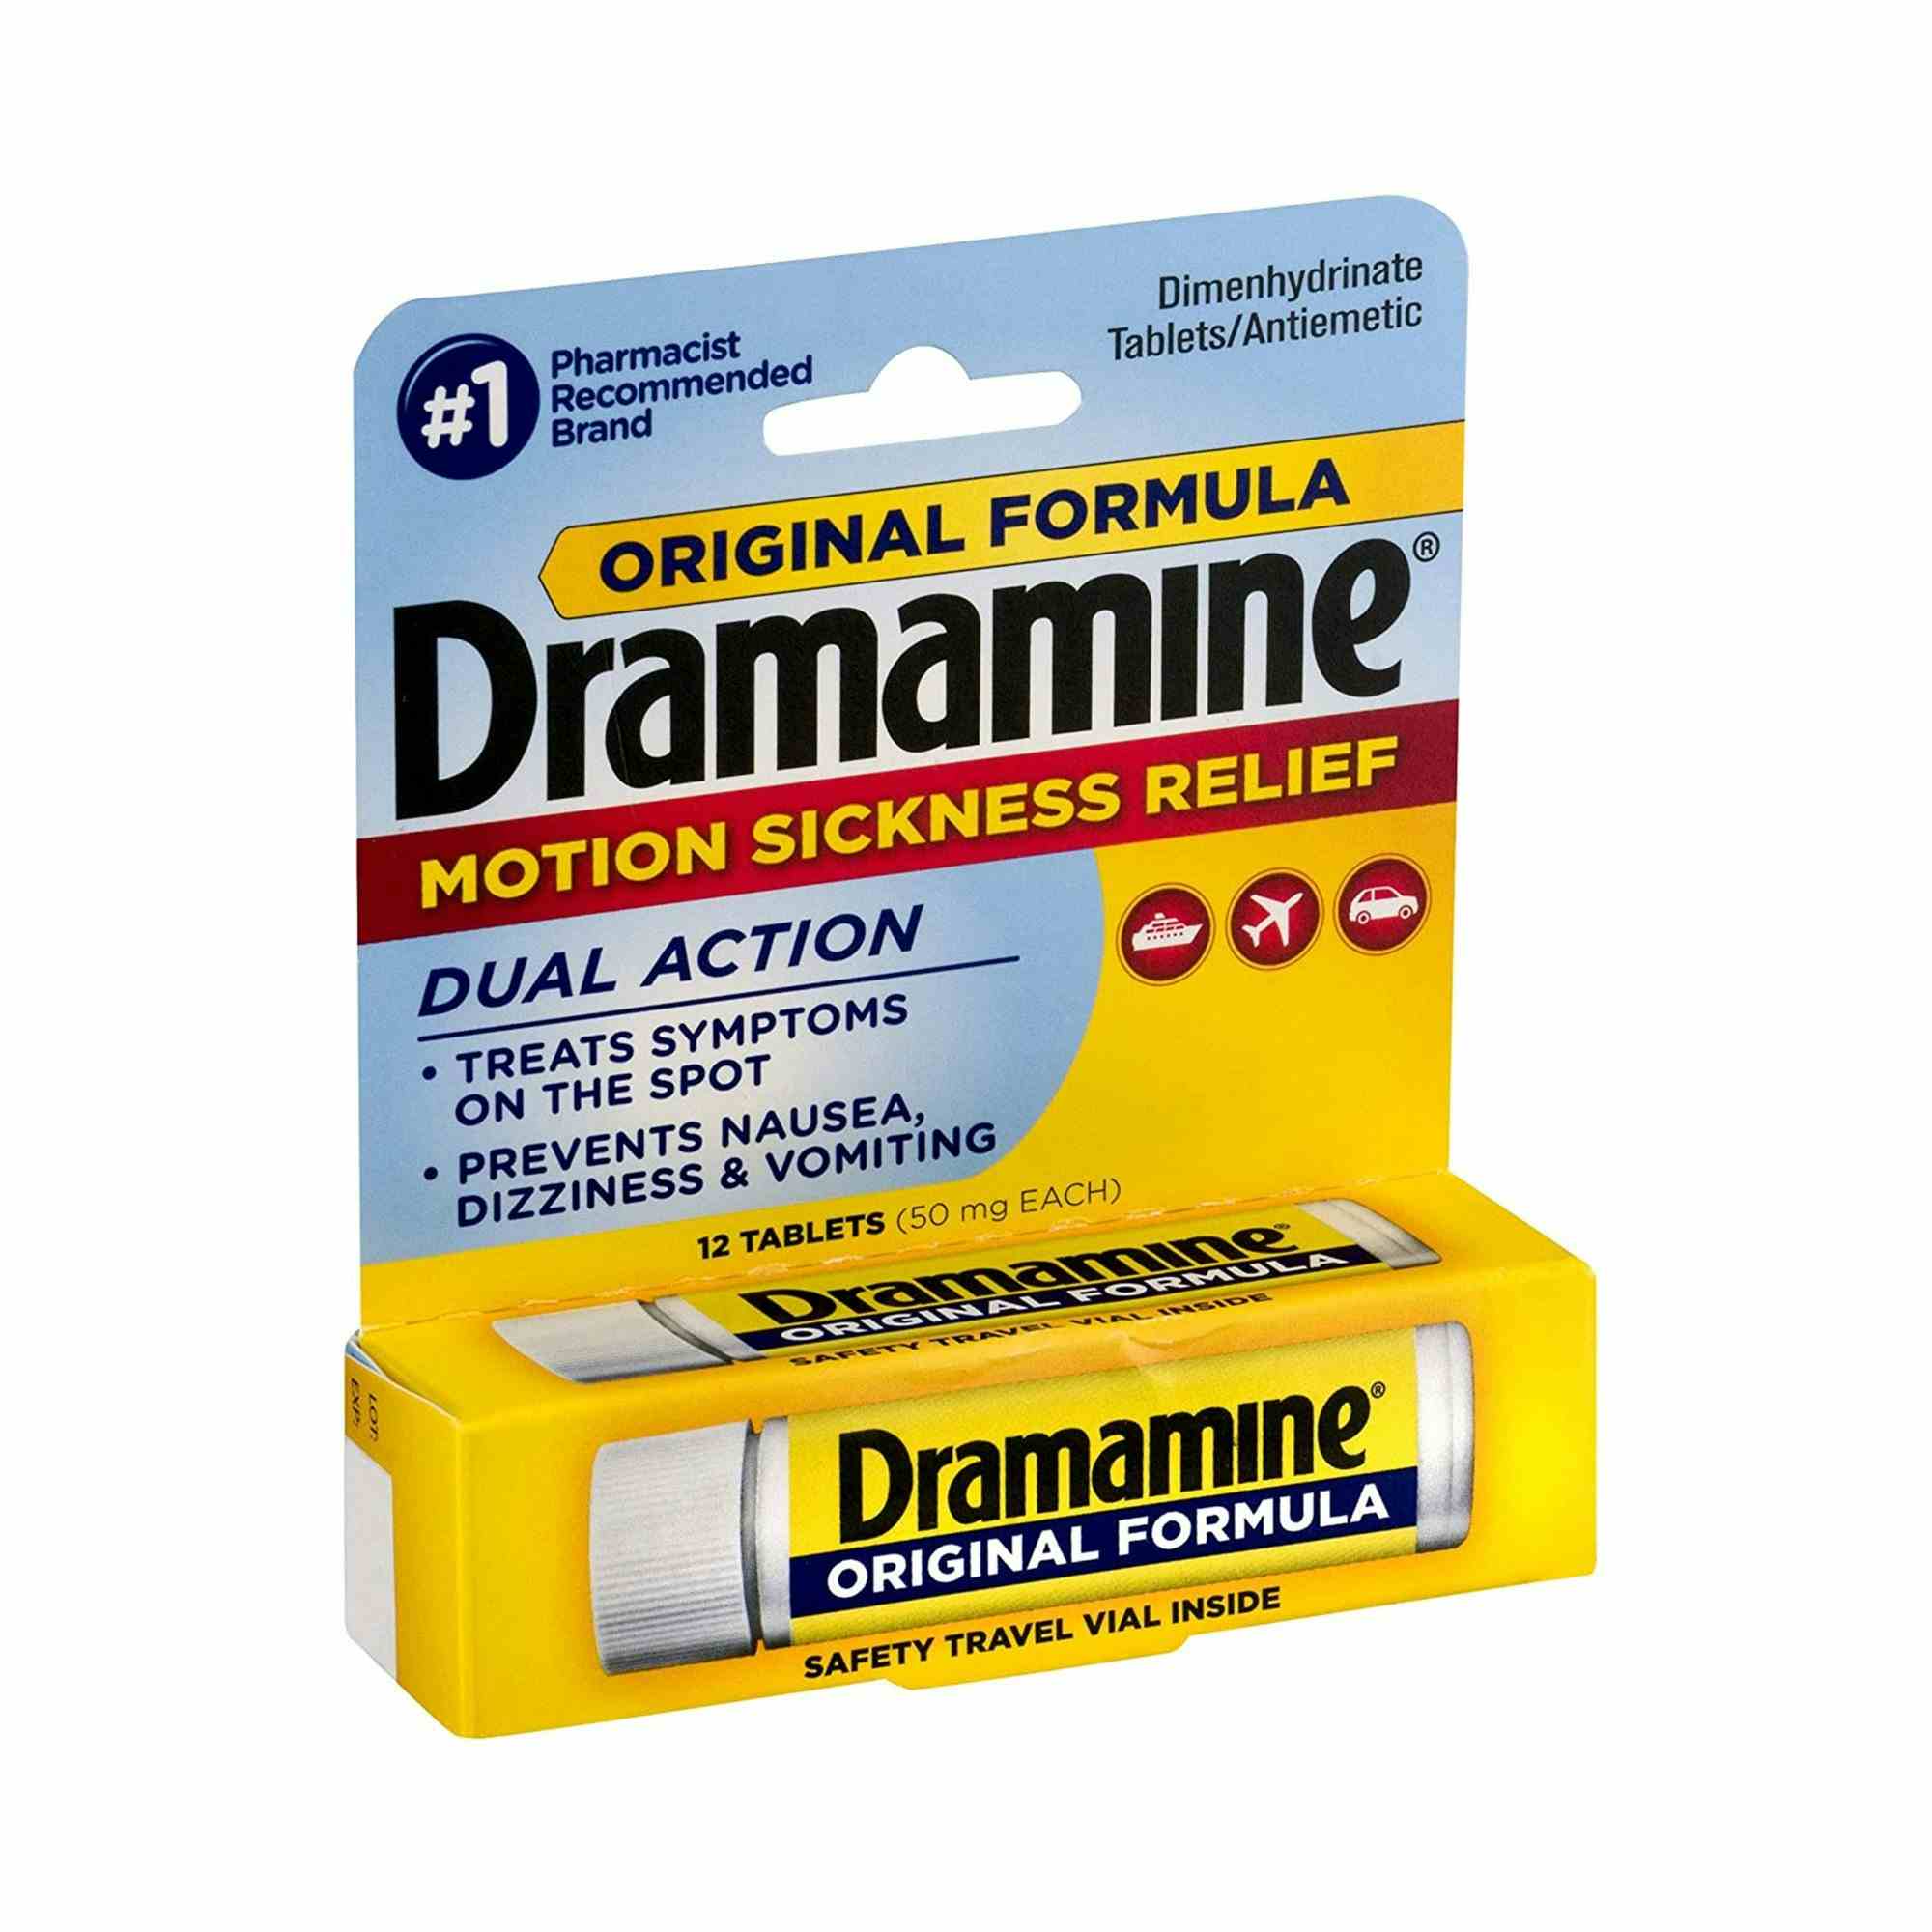 Dramamine Original Formula Motion Sickness Relief, 50 mg., 83124800197, Bottle of 12 Tablets